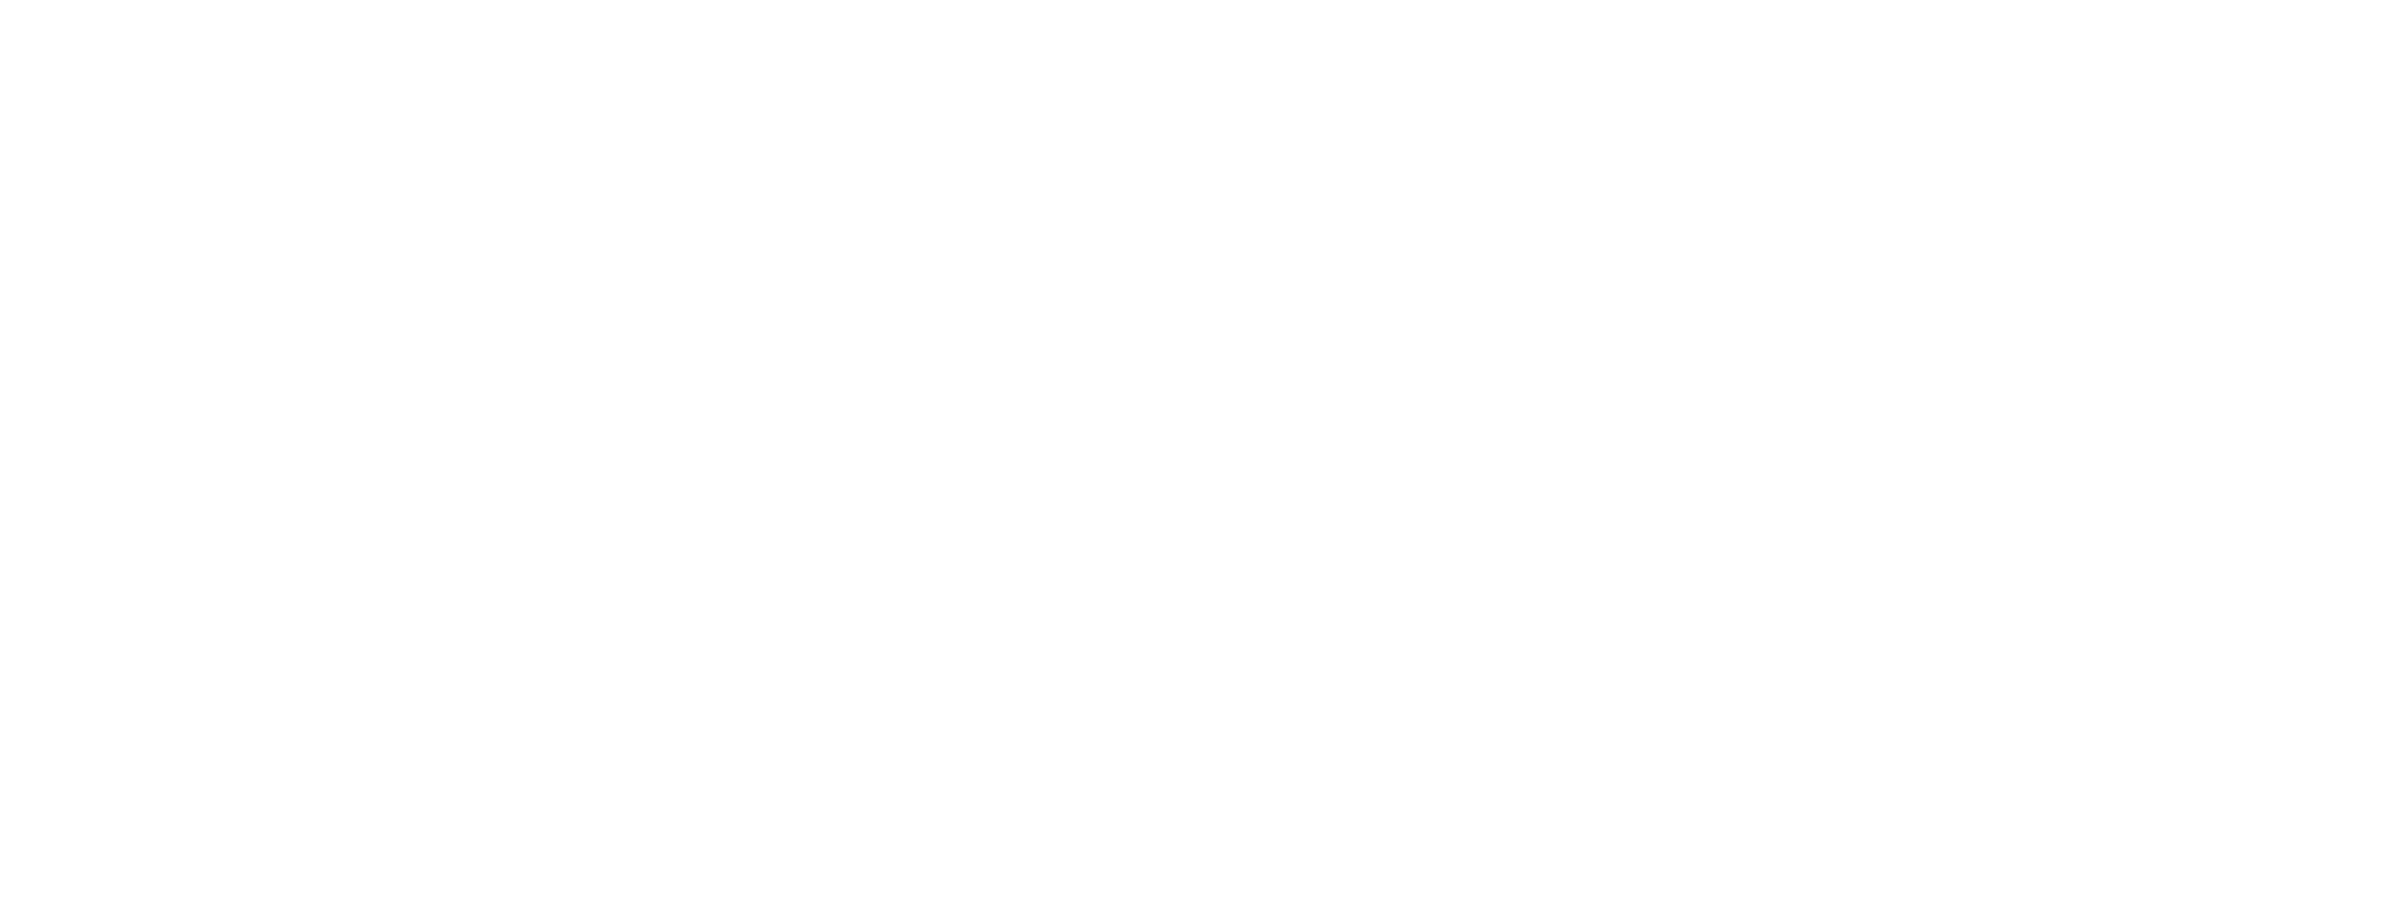 Oxfam Logo PNG Transparent & SVG Vector.